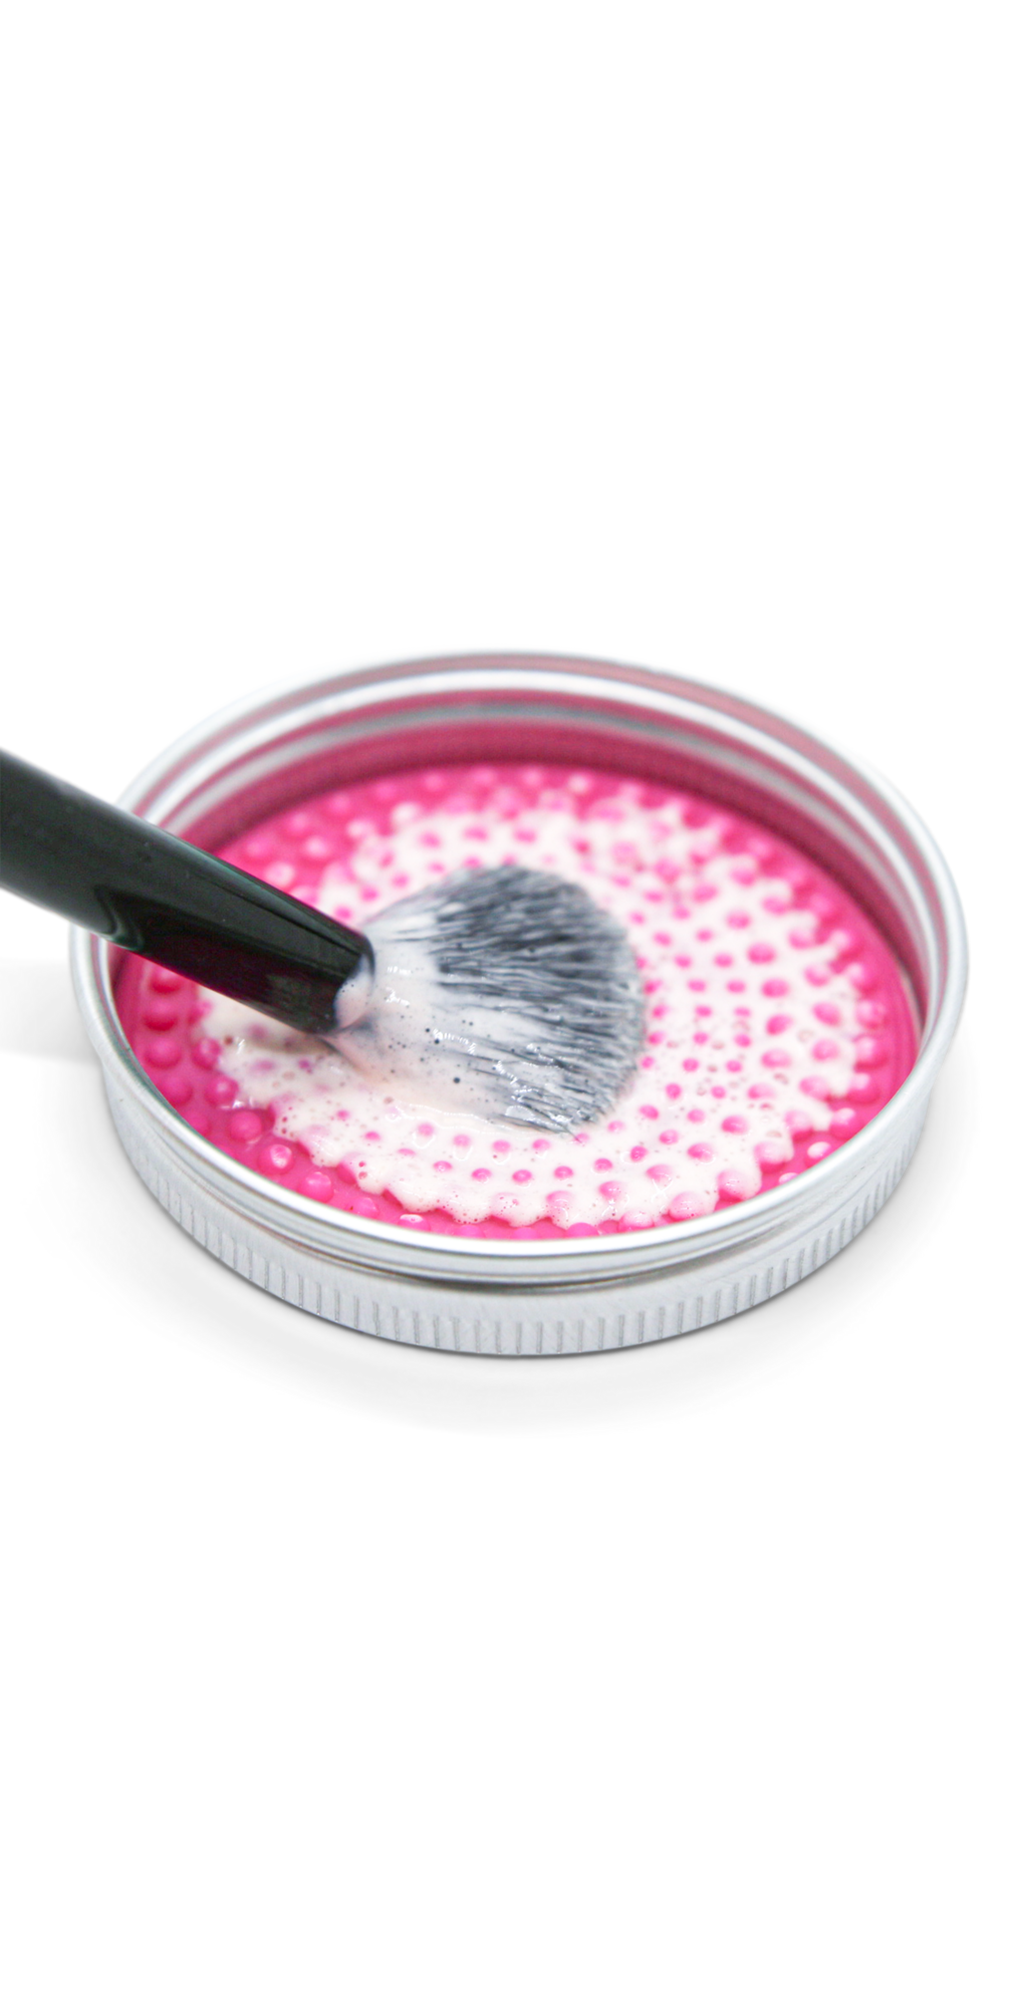 J.Cat Beauty Lemon-Aid Makeup Brush Soap